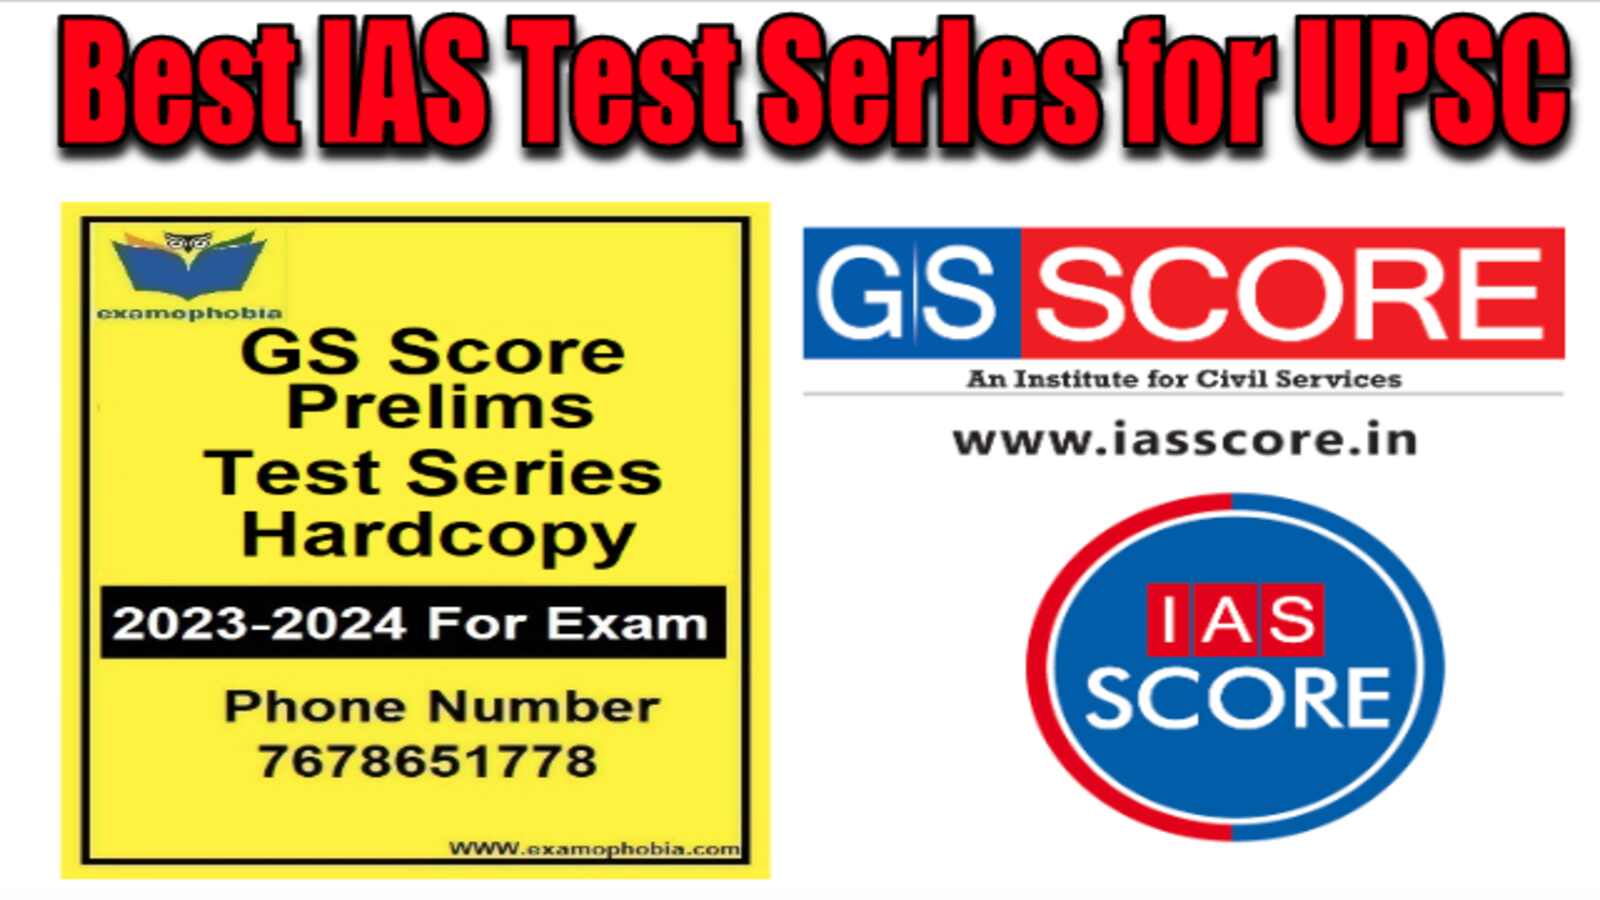 GS Score Best IAS Test series for UPSC